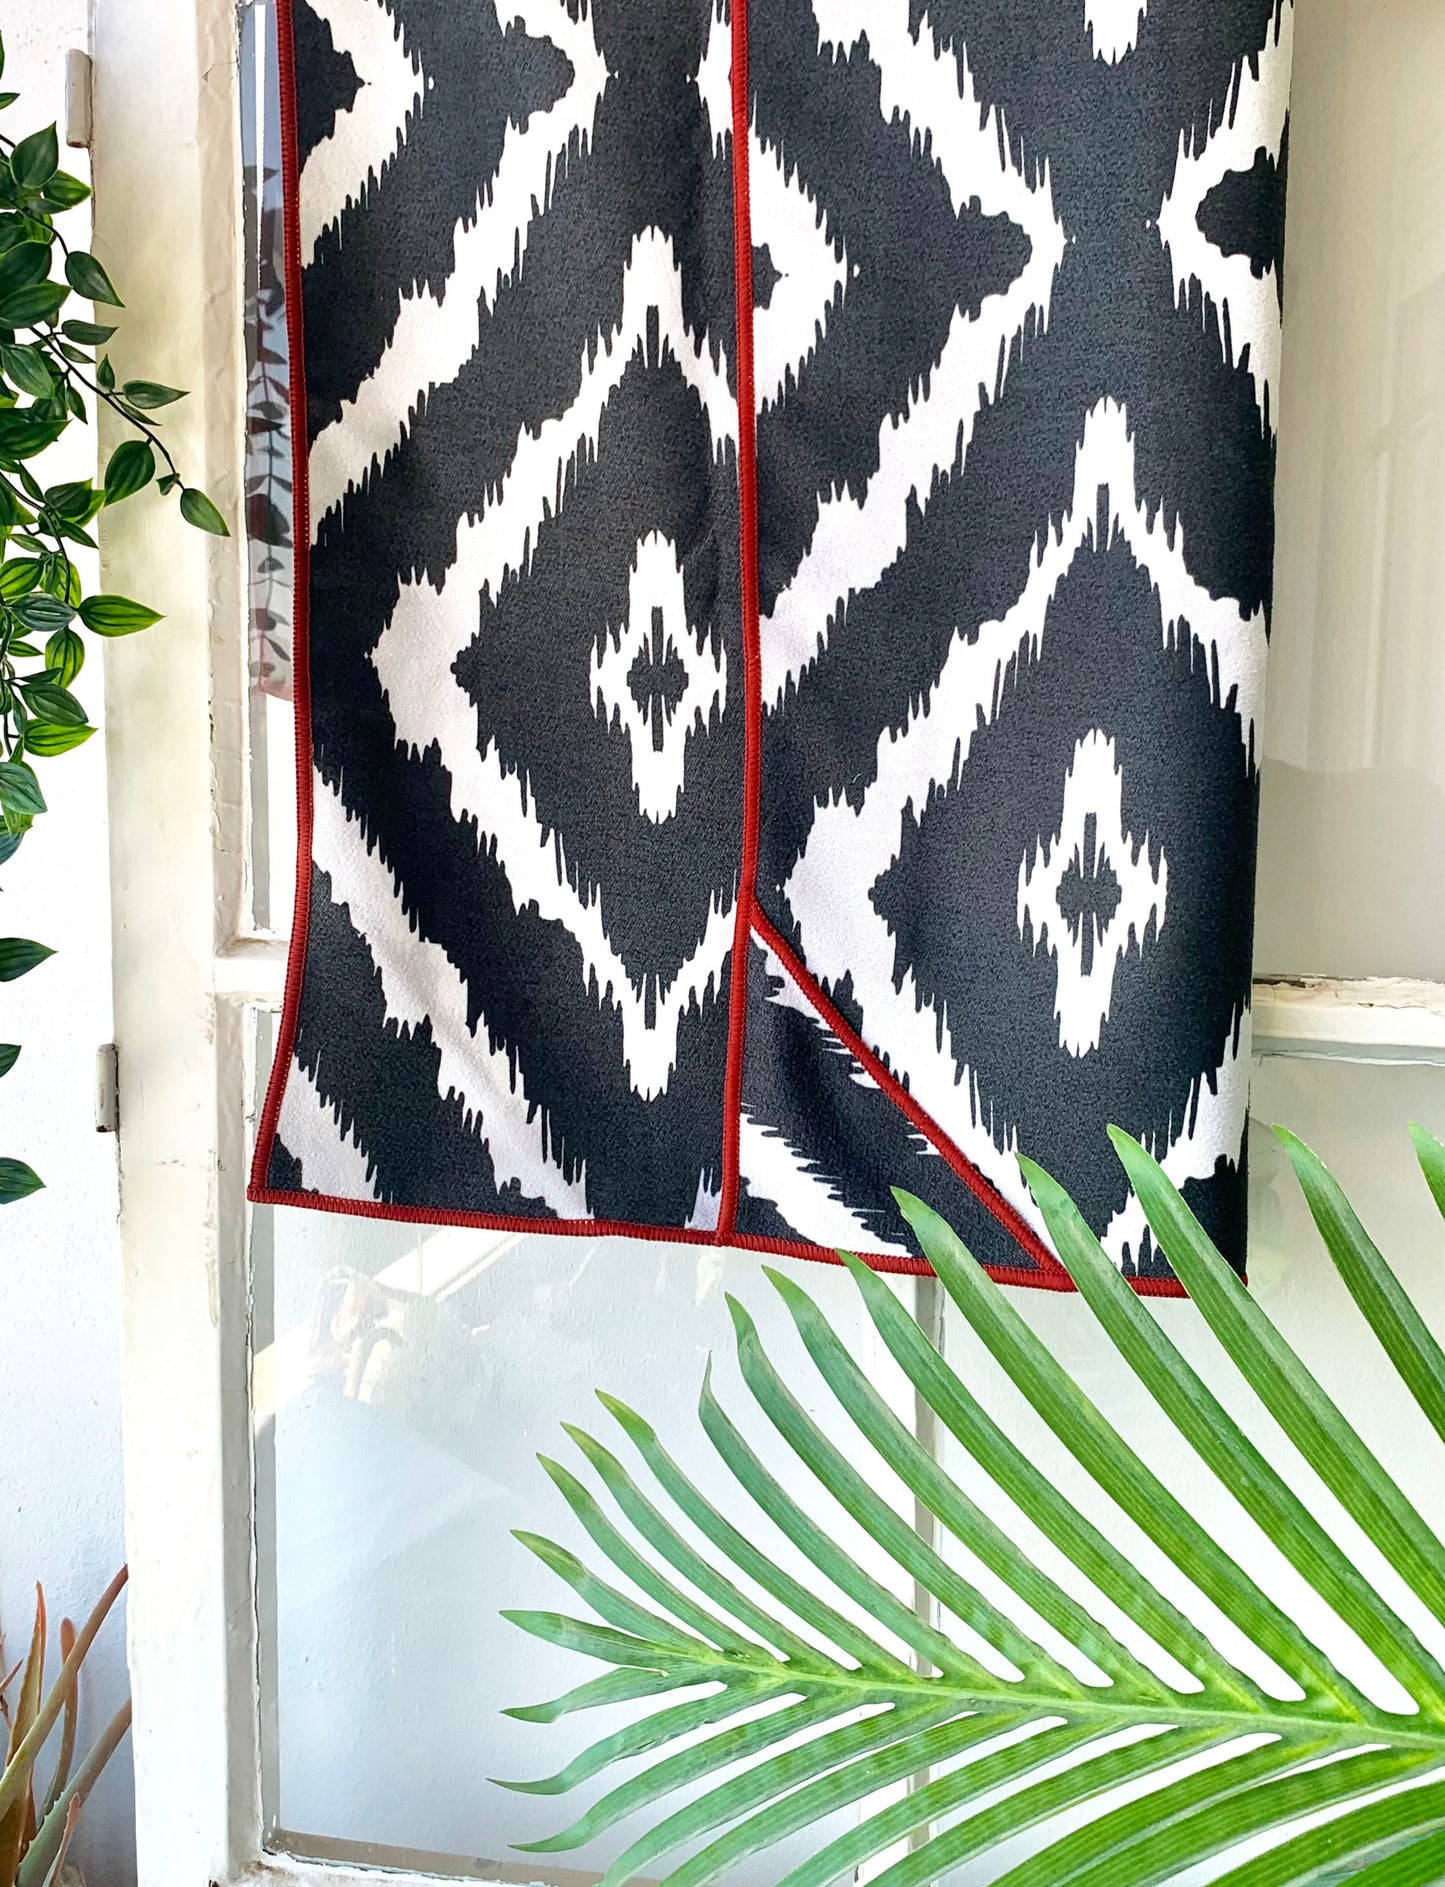 Kala fiber towel